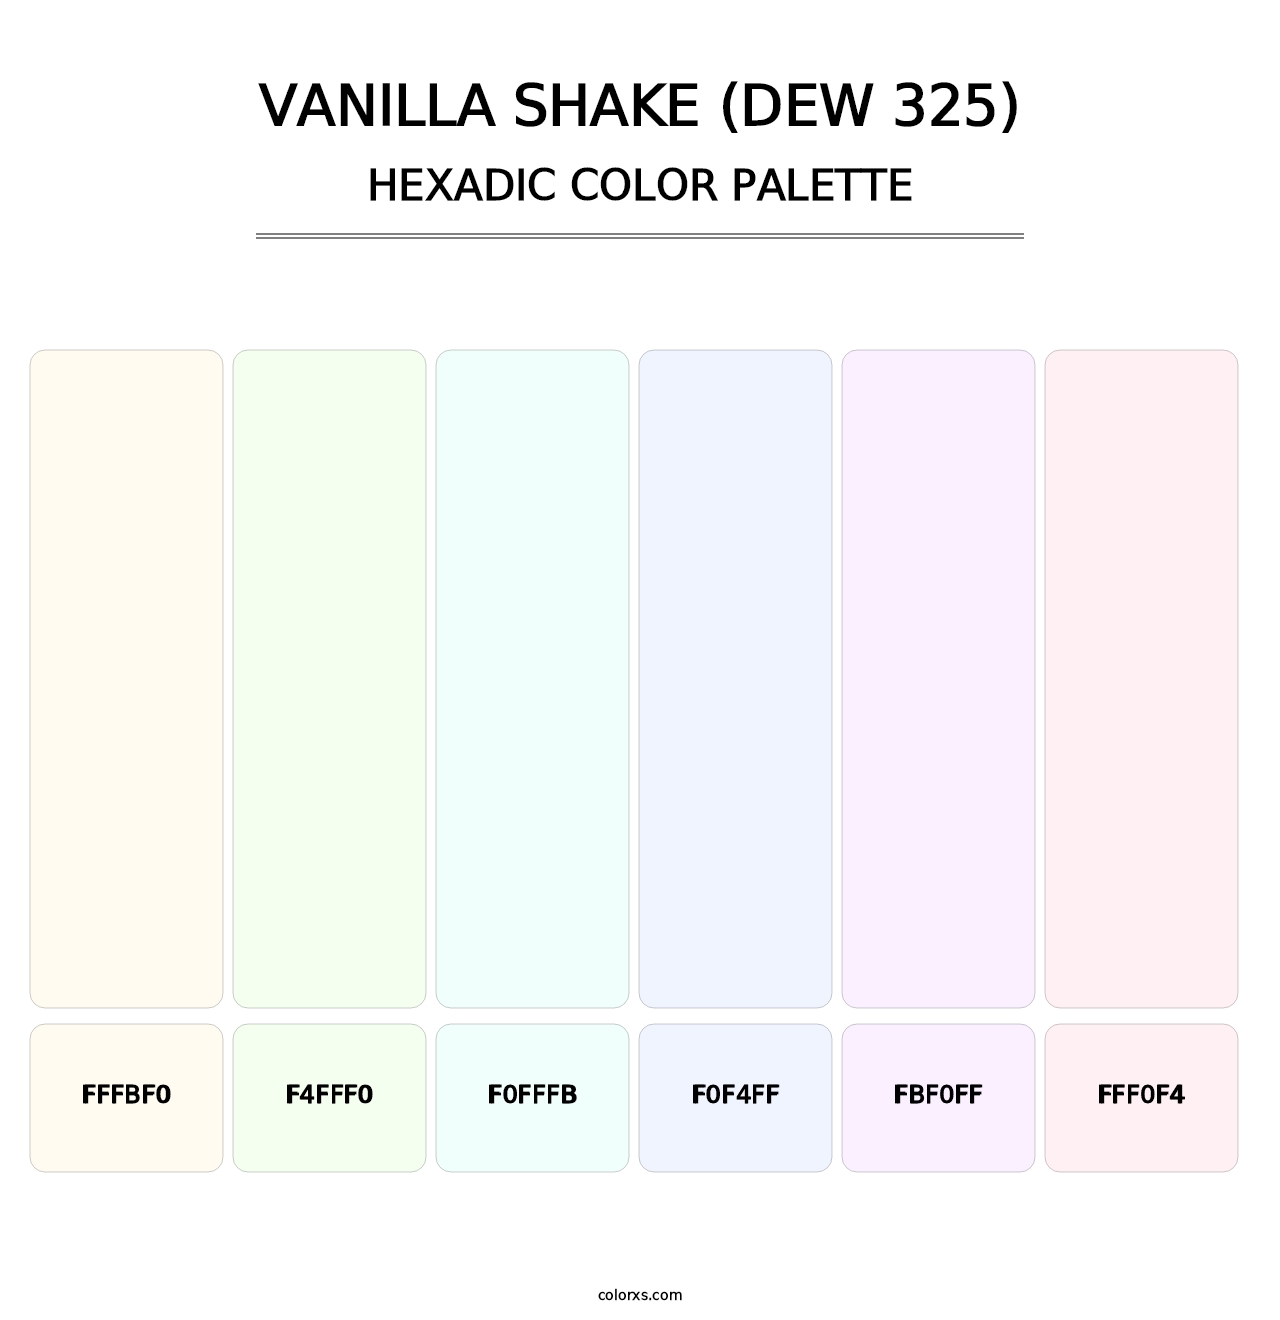 Vanilla Shake (DEW 325) - Hexadic Color Palette